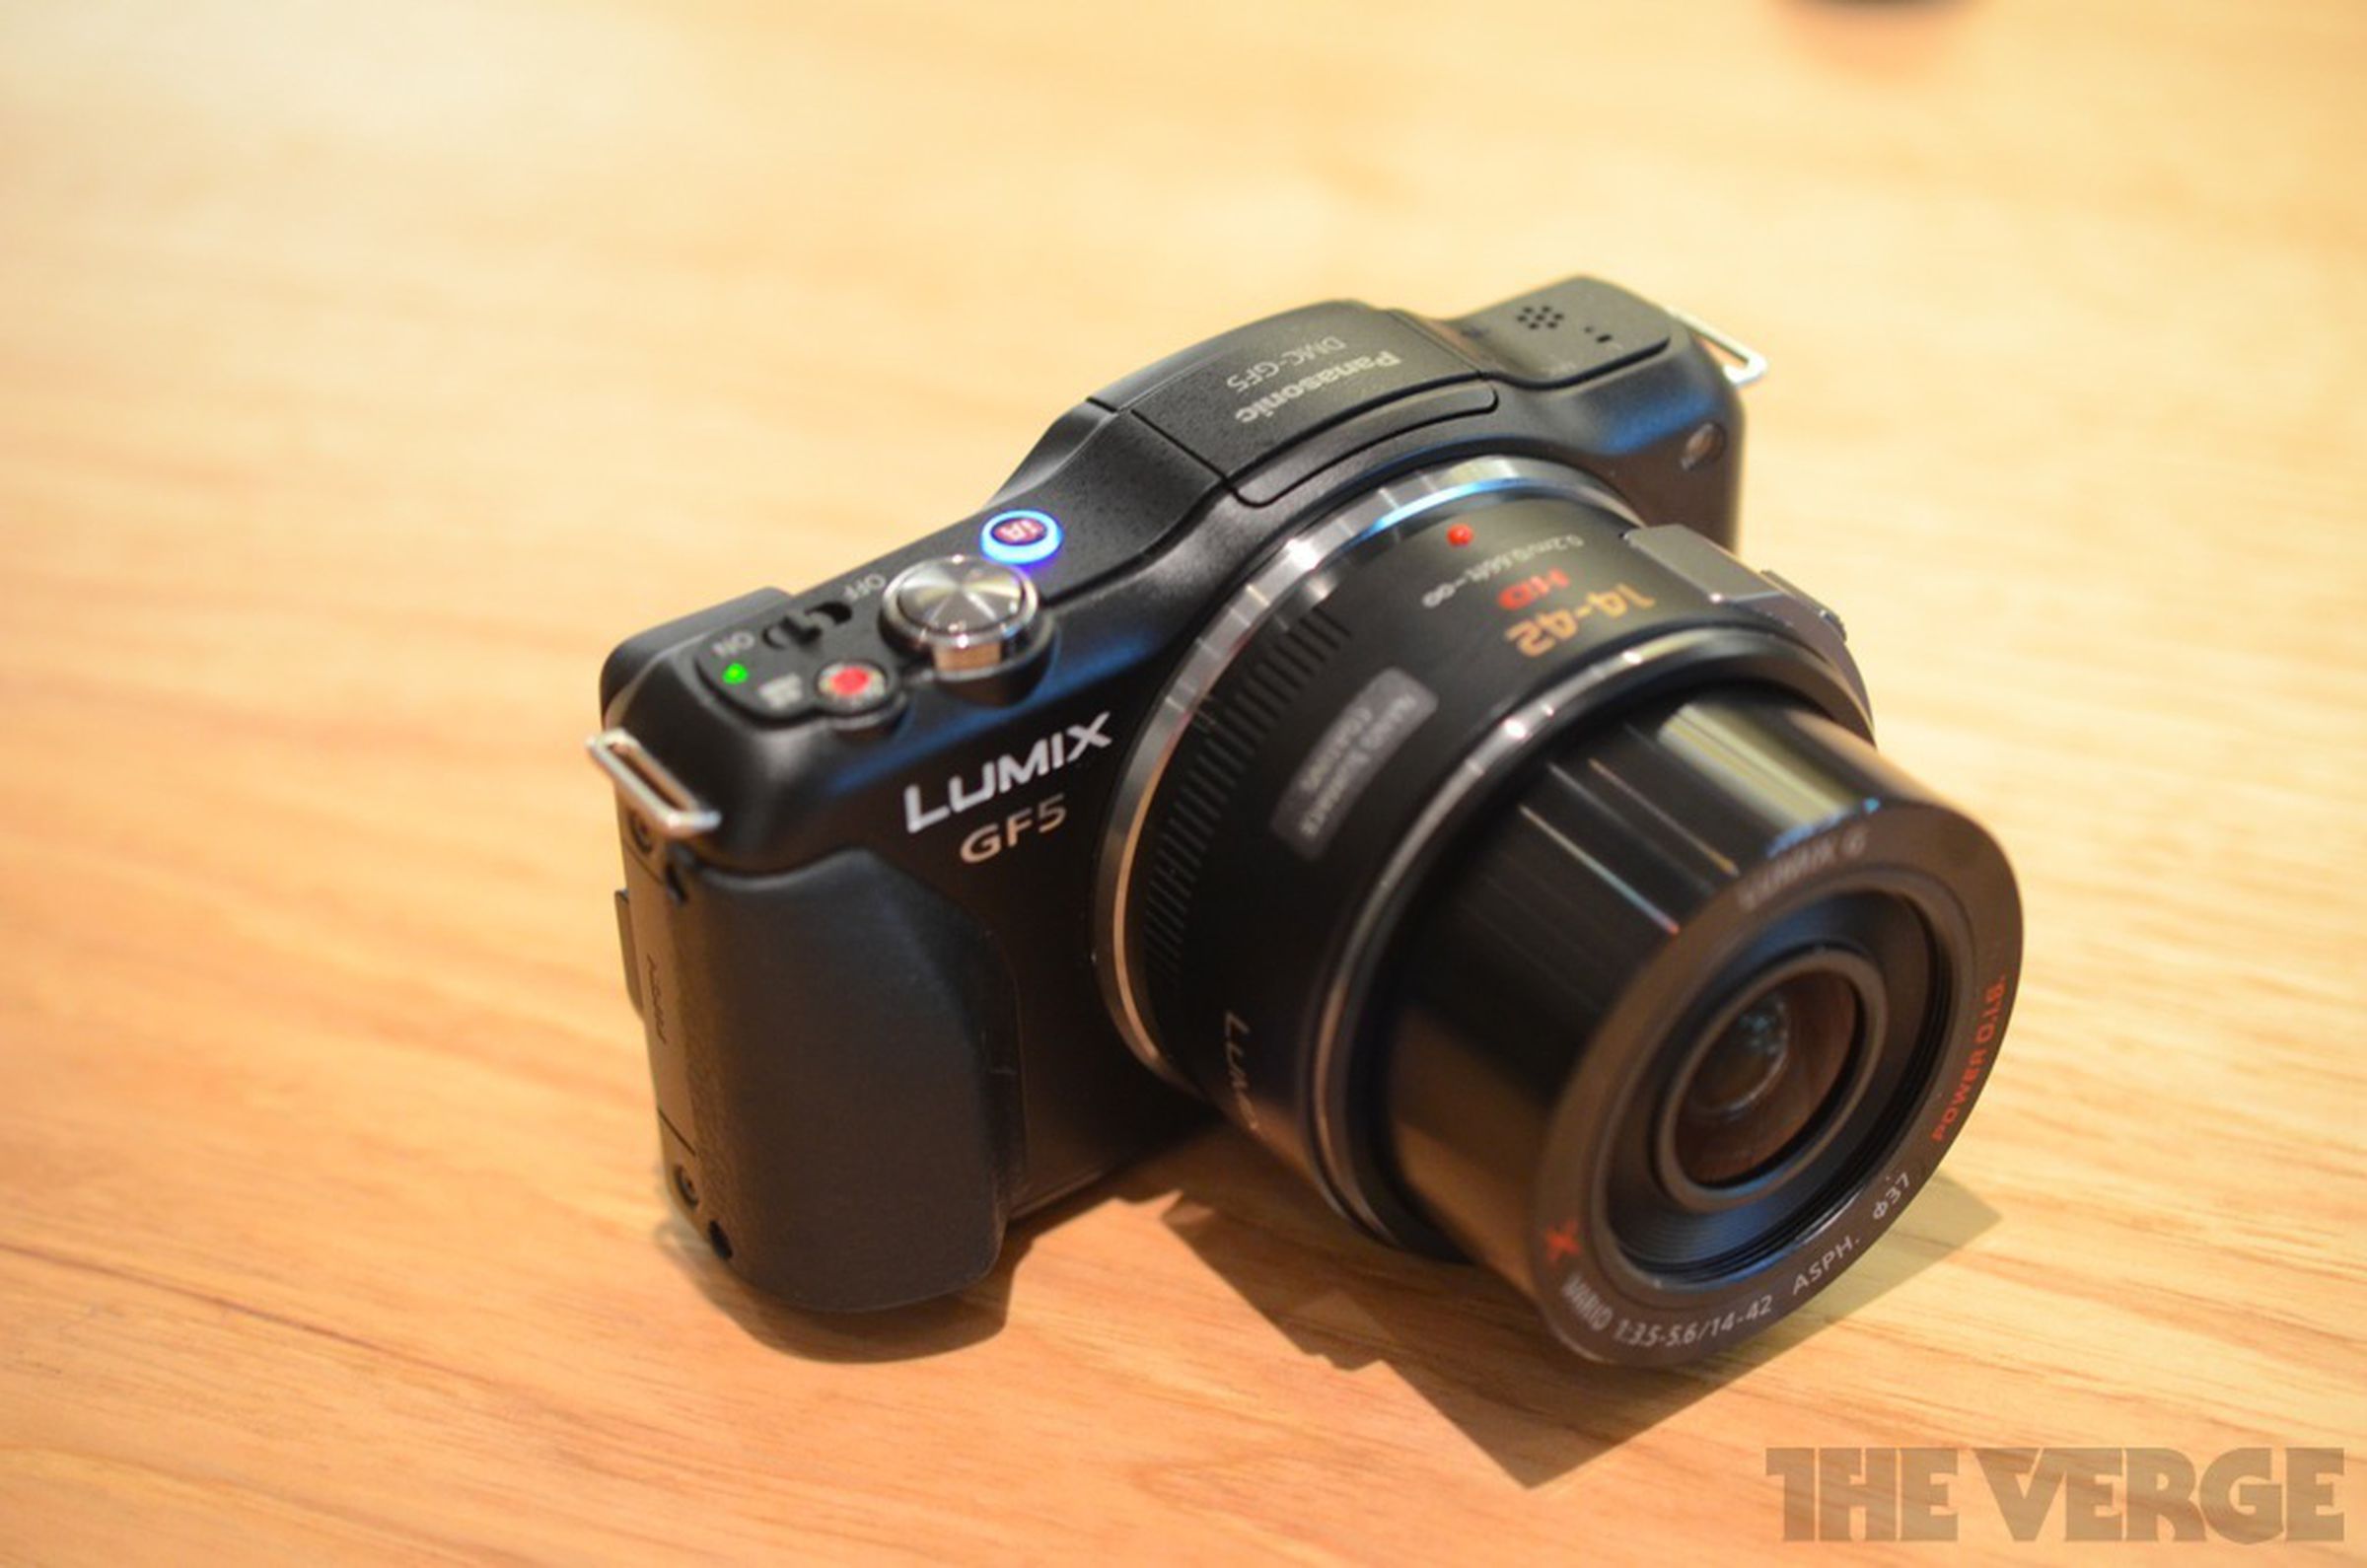 Panasonic Lumix DMC-GF5 hands-on pictures